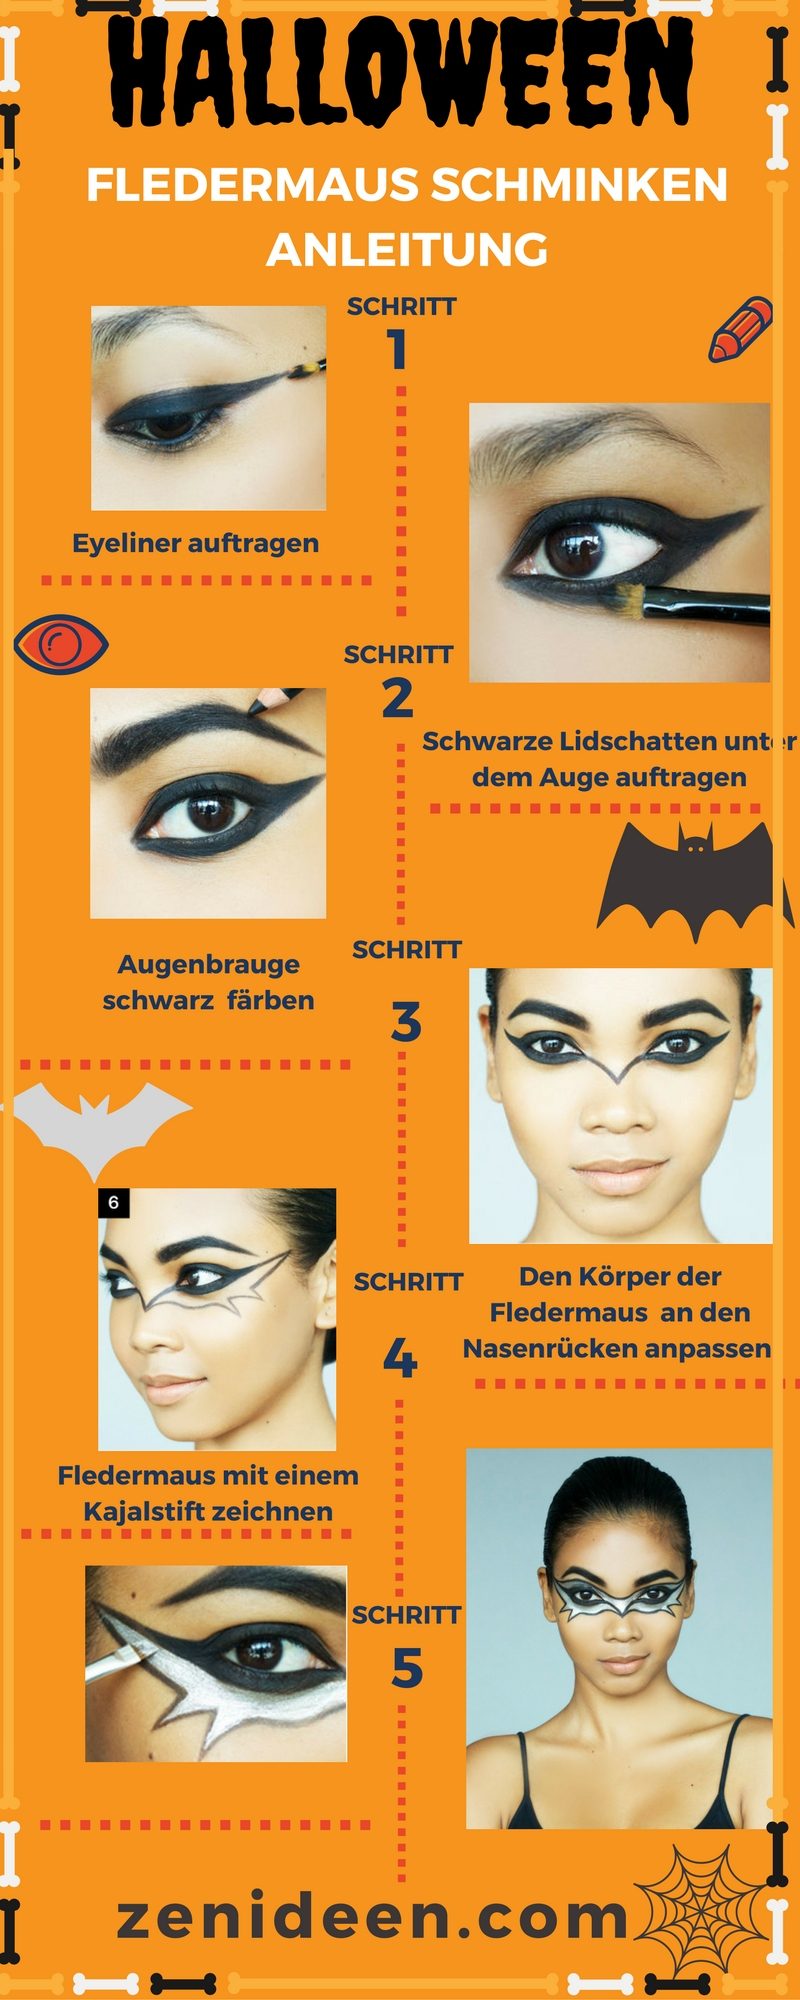 Bat make-up Halloween istruzioni